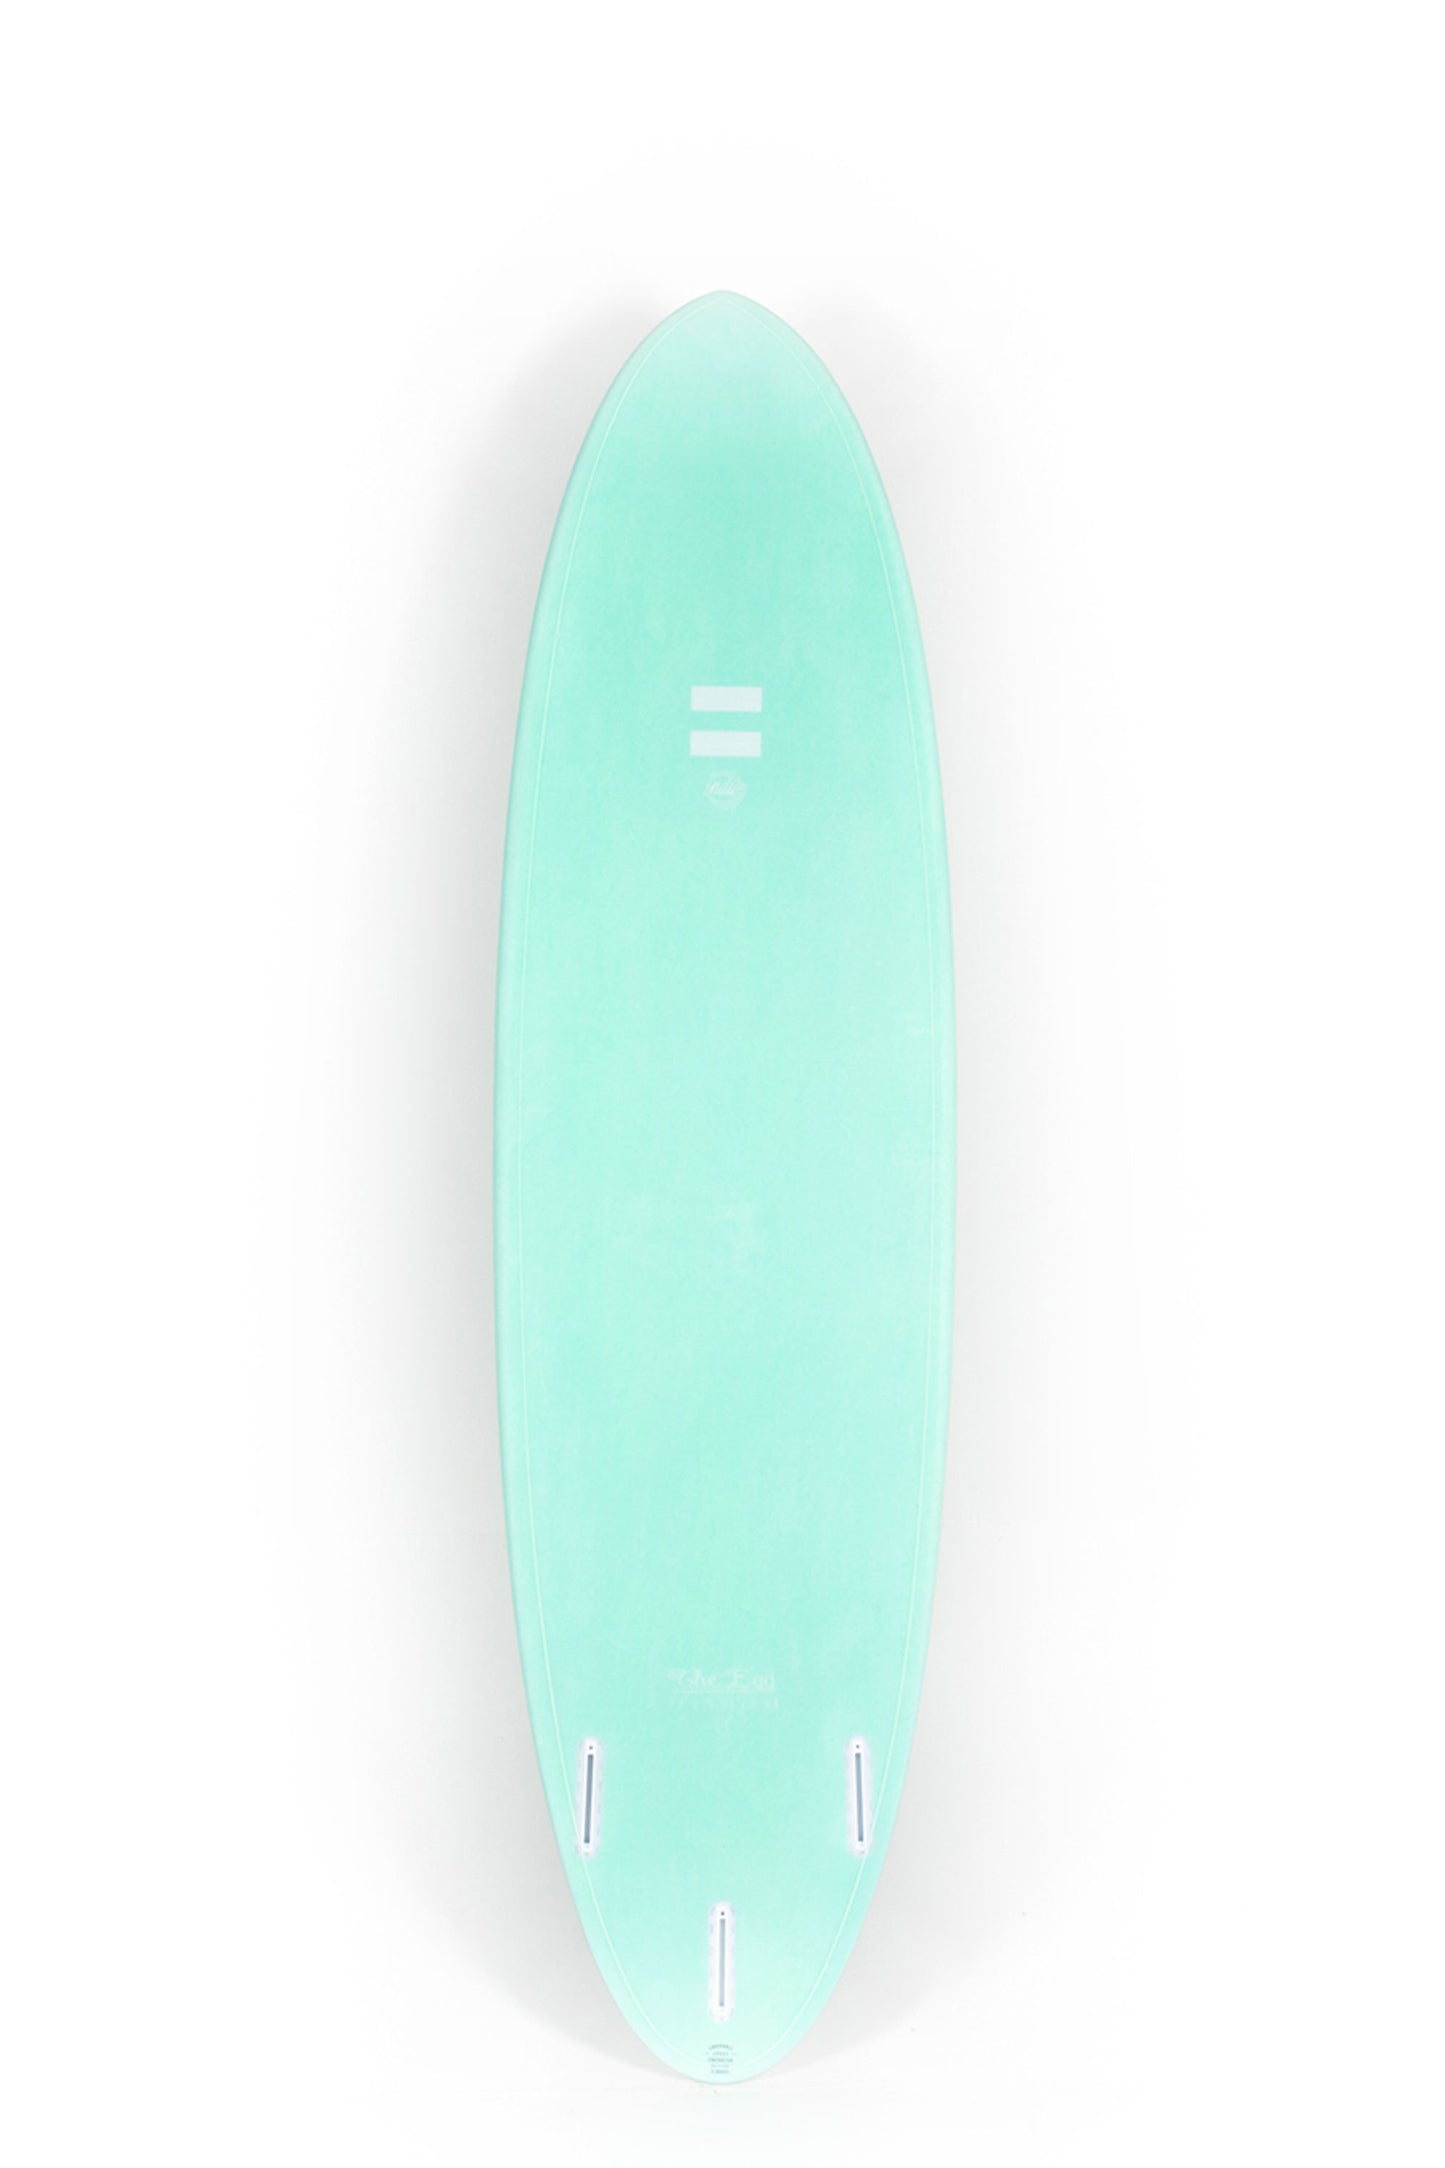 Pukas-Surf-Shop-Indio-Surfboards-The-Egg-Aqua-Mint